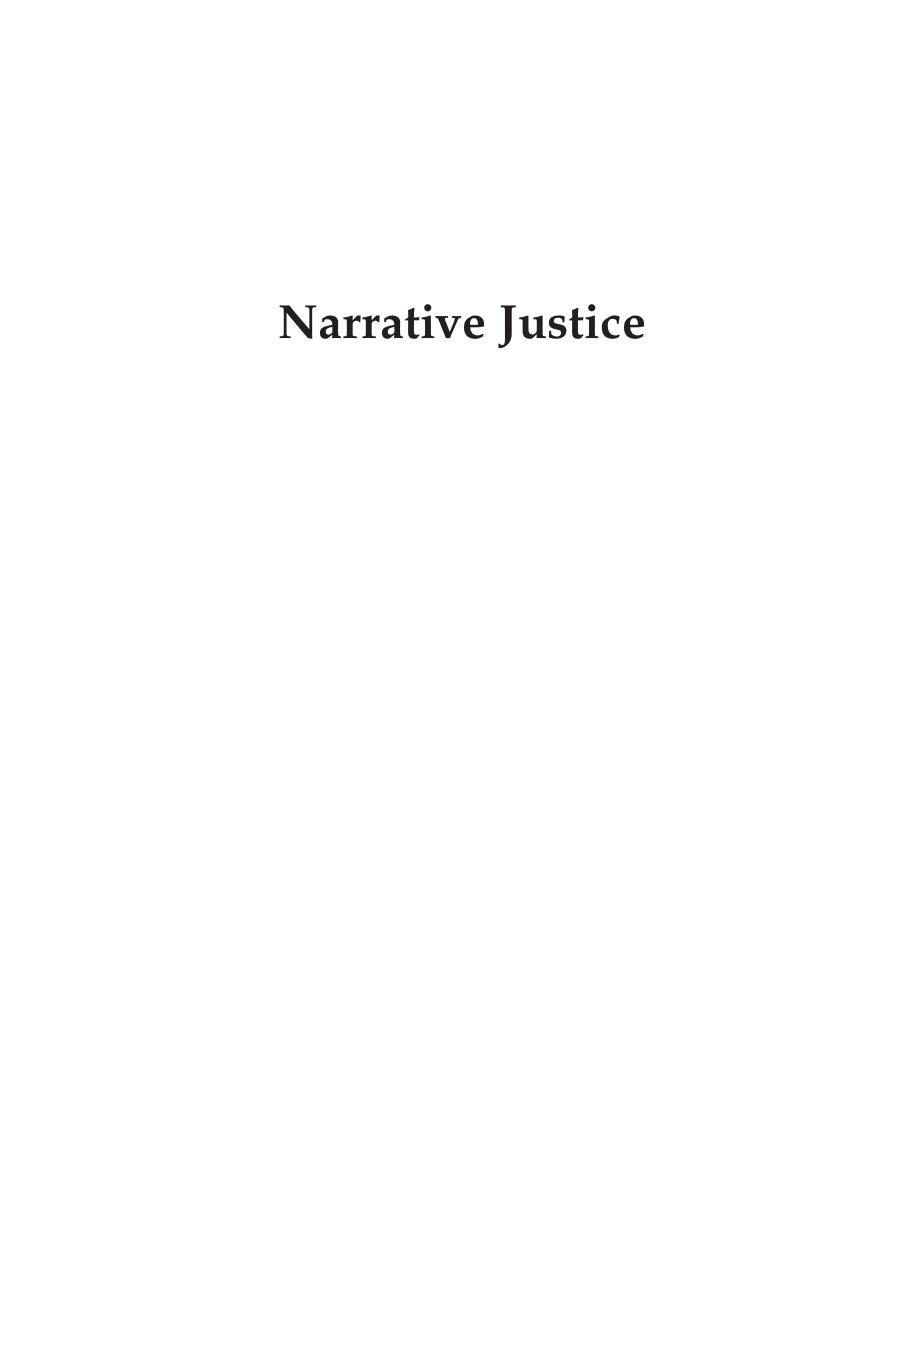 Narrative Justice by Rafe McGregor